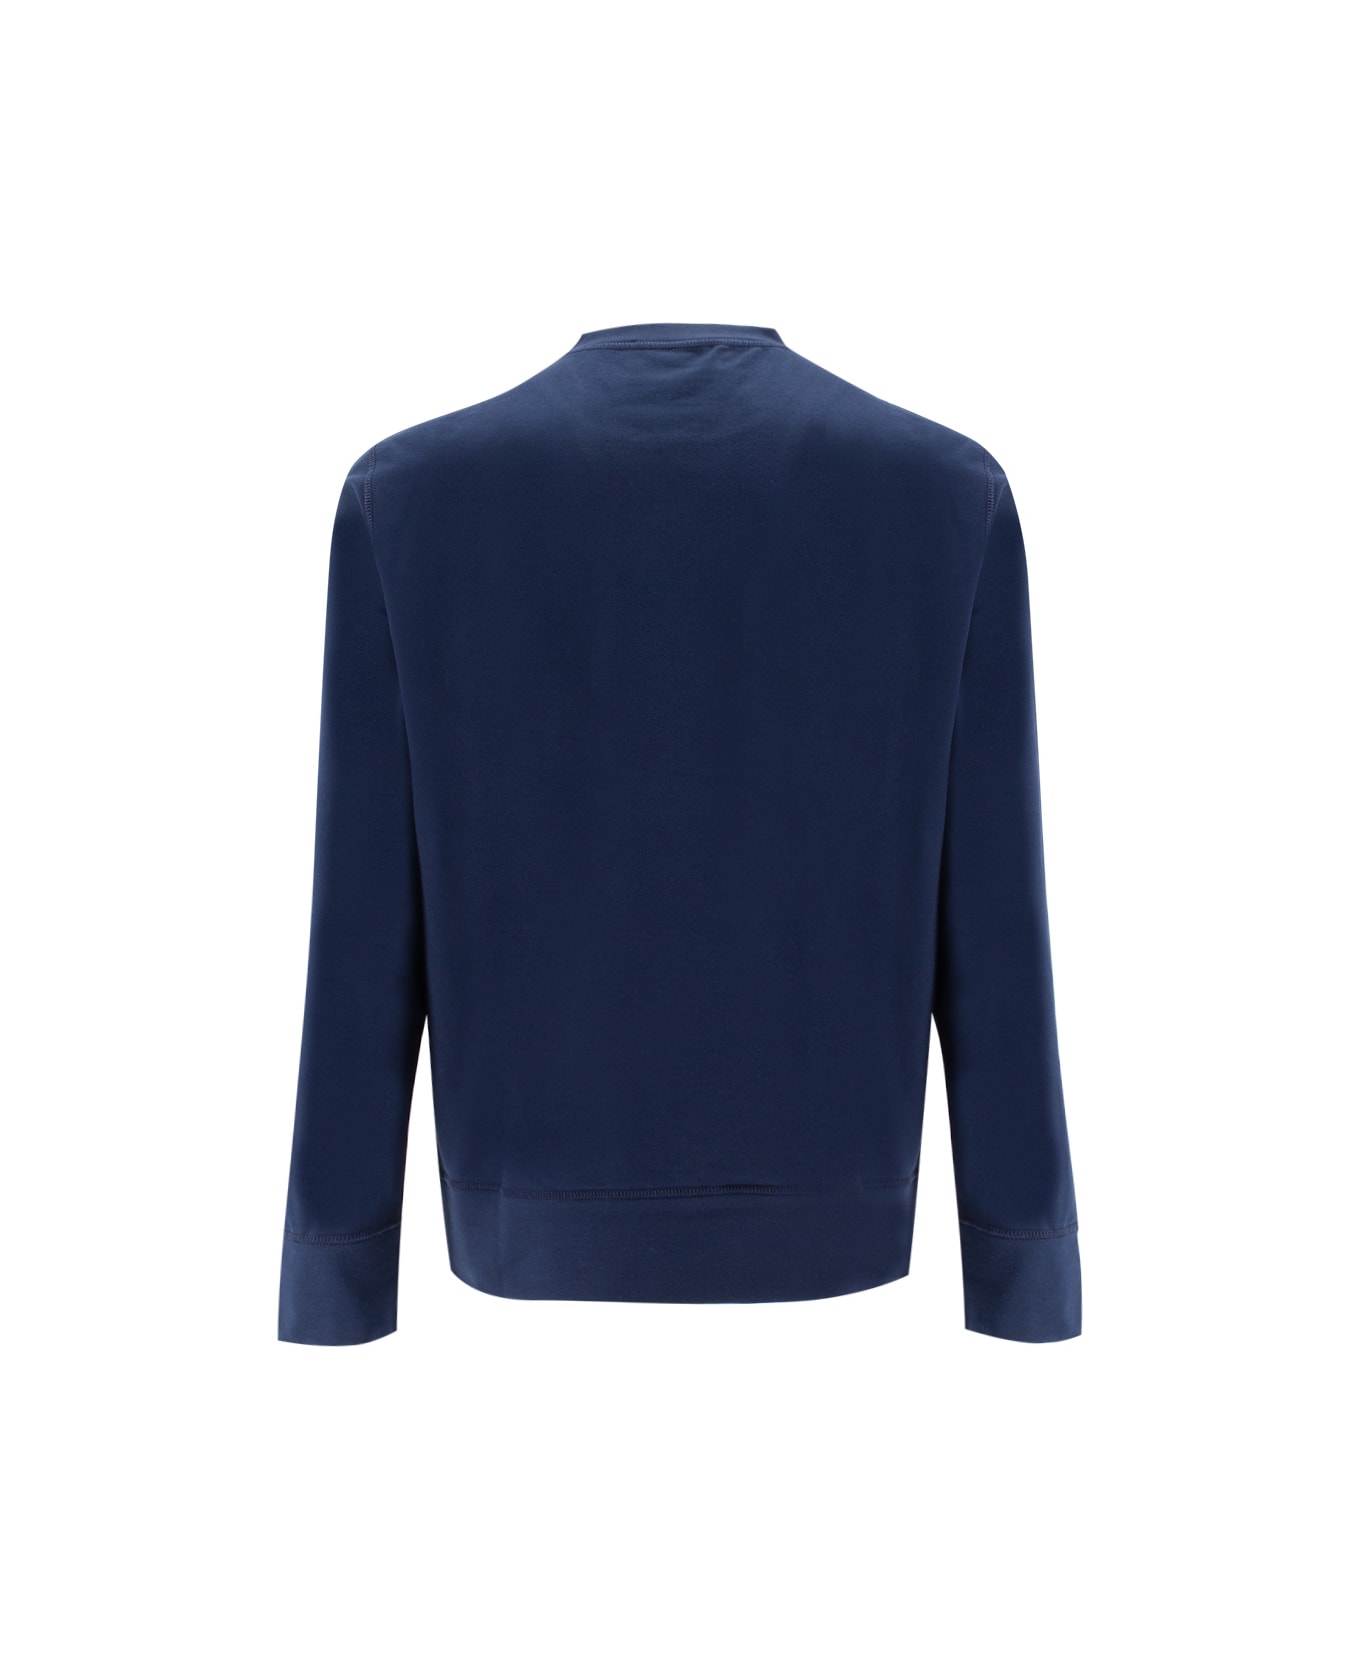 Kiton Sweatshirt - NAVY BLUE